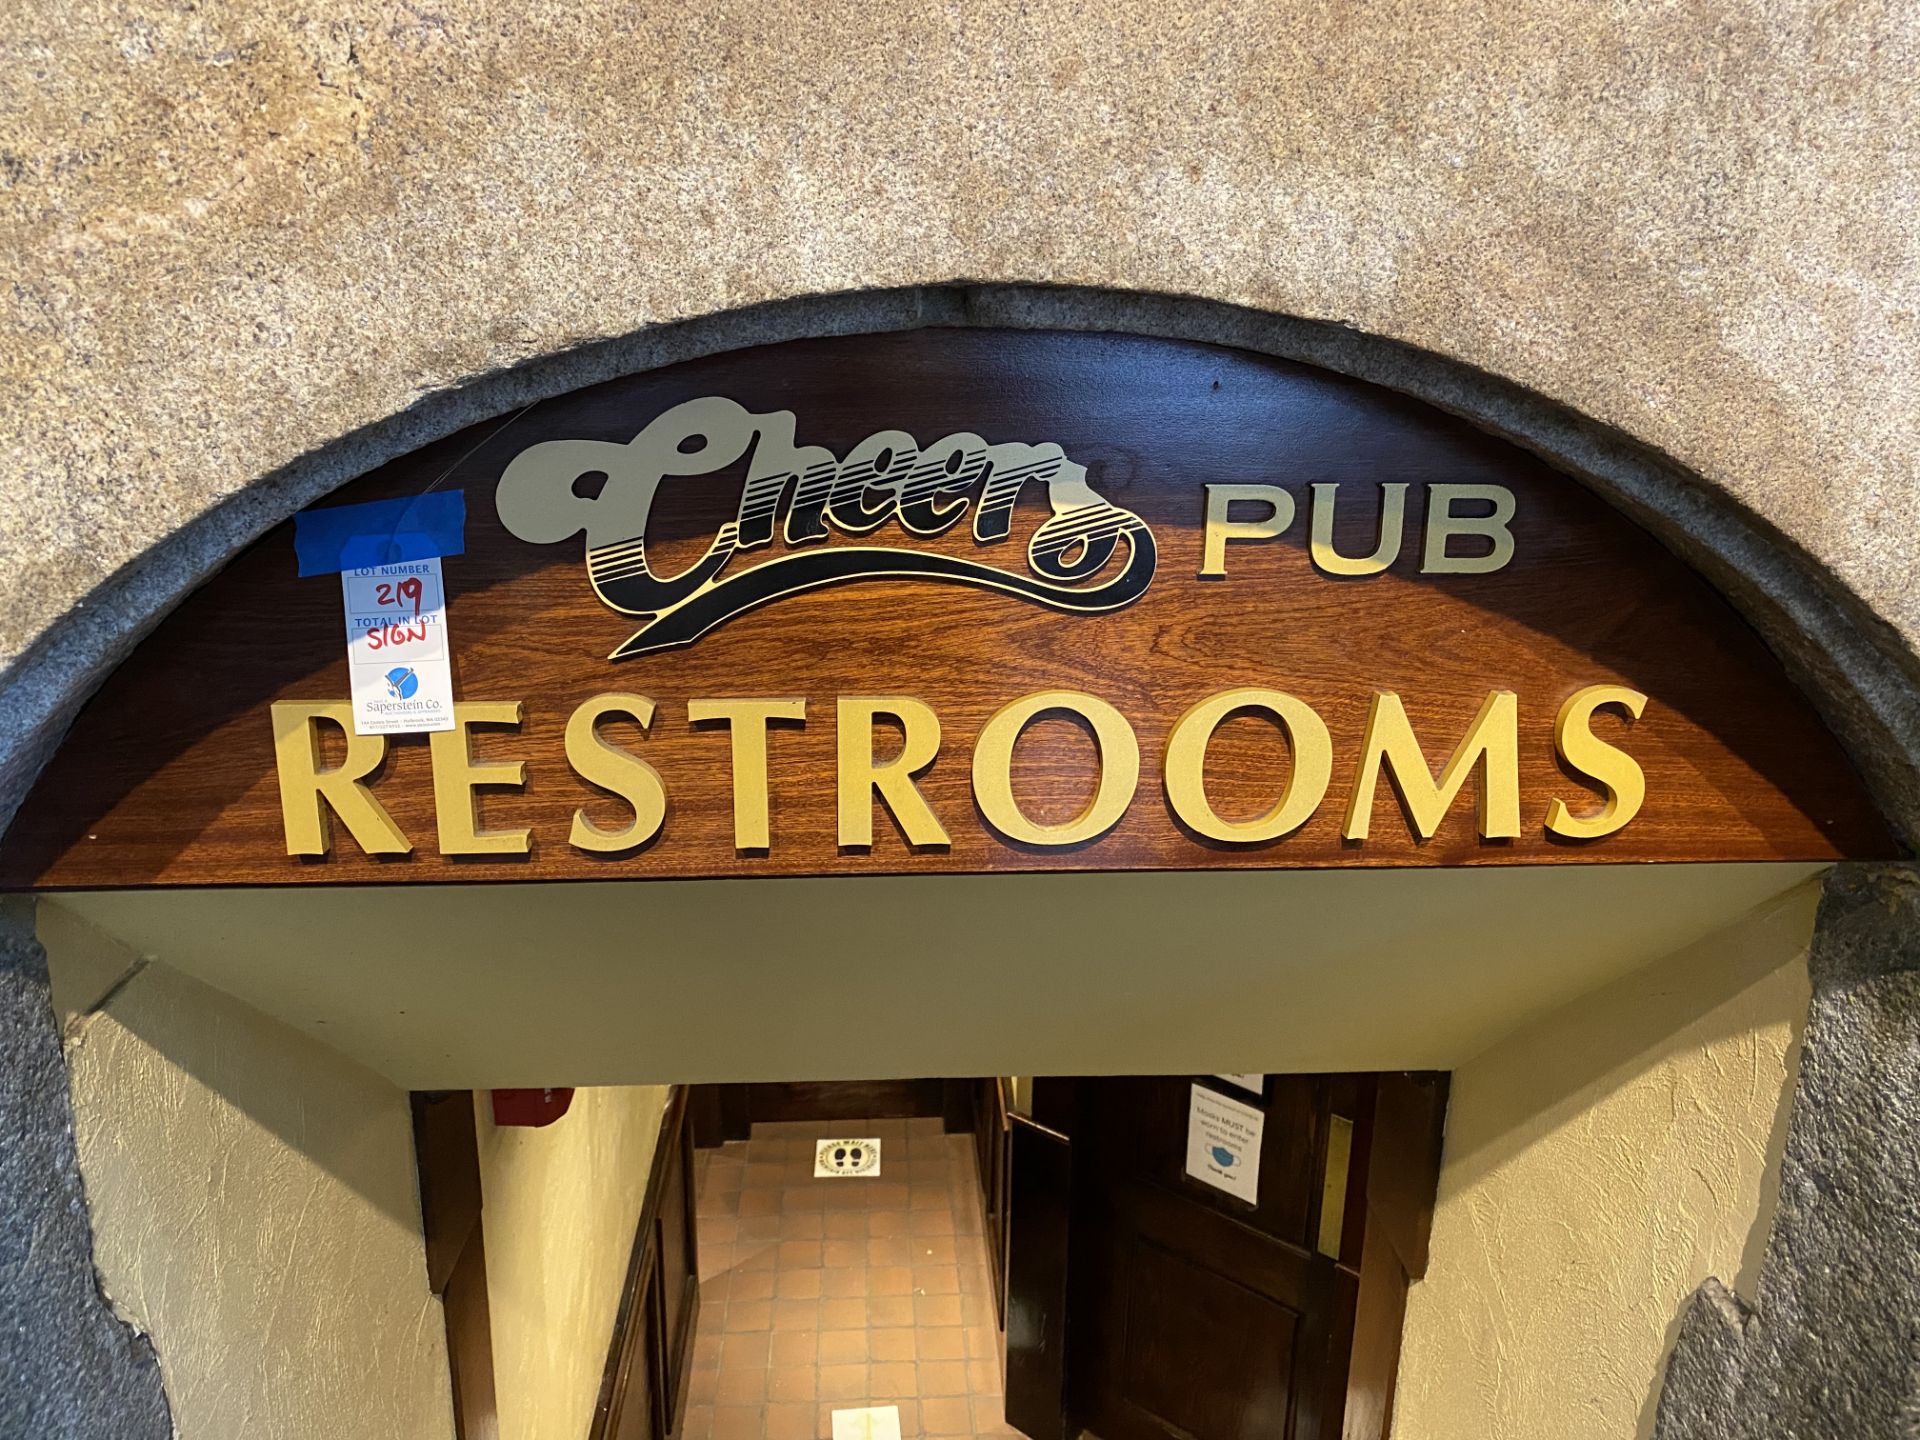 Cheers Pub Restrooms Wood Sign Half Moon 50" x 14"